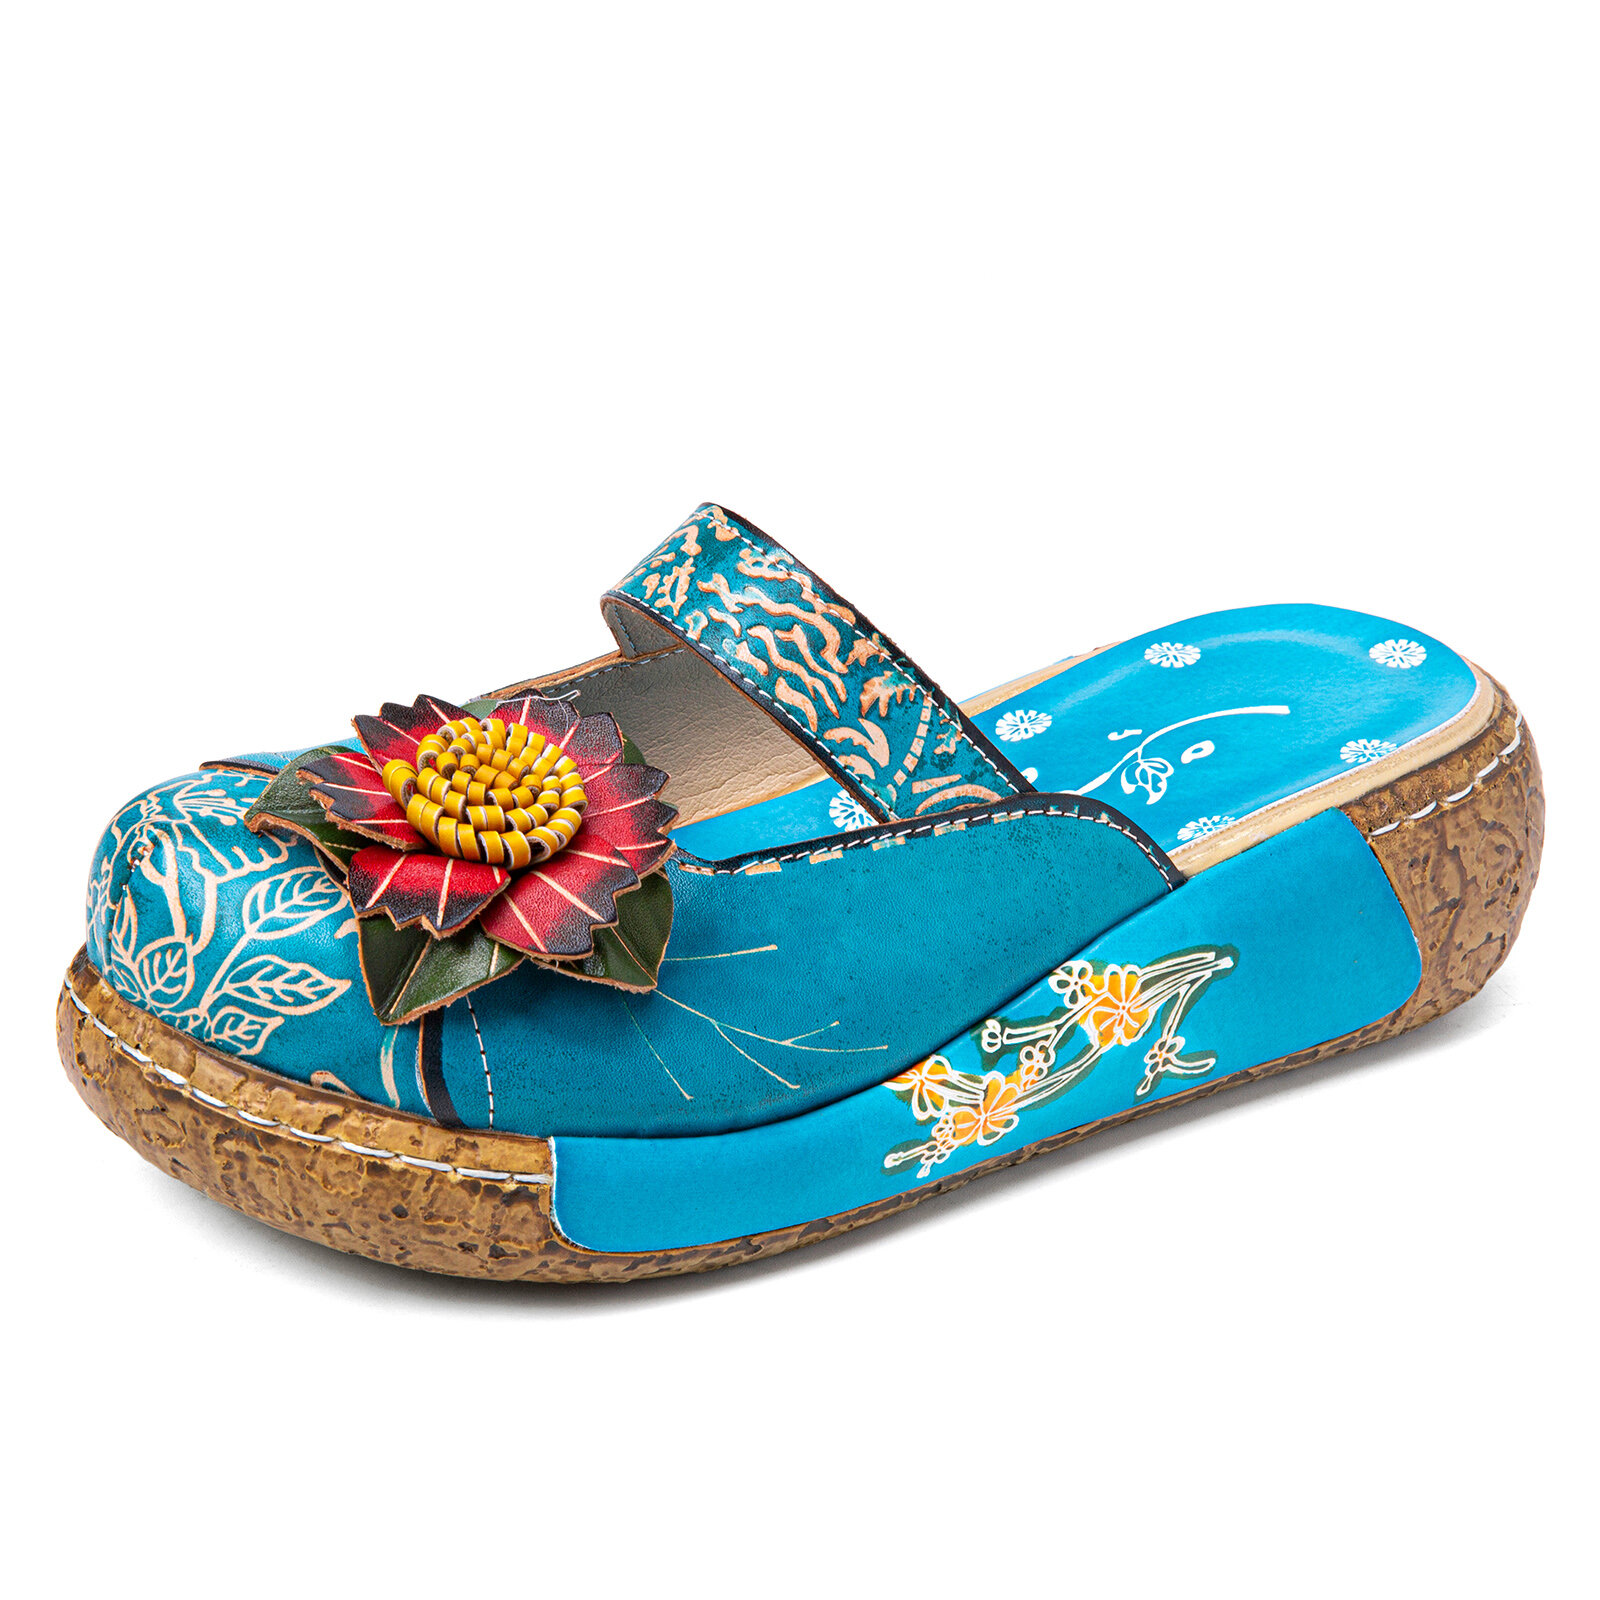 Socofy Handmade Leather Comfort Floral Holiday Platform Sandals